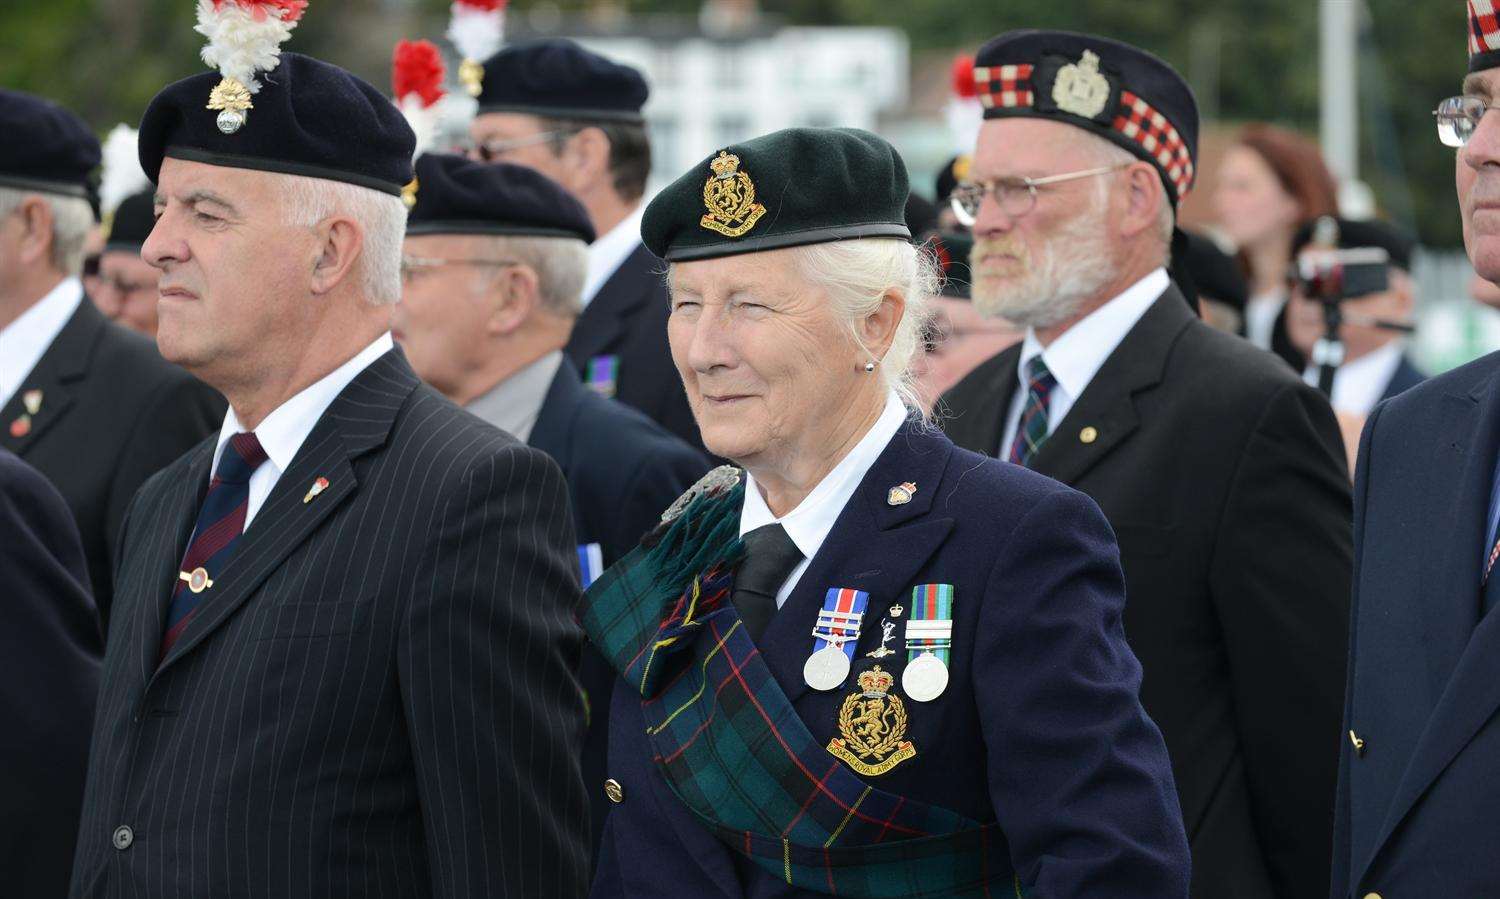 Veterans at the WW1 centenary commemoration